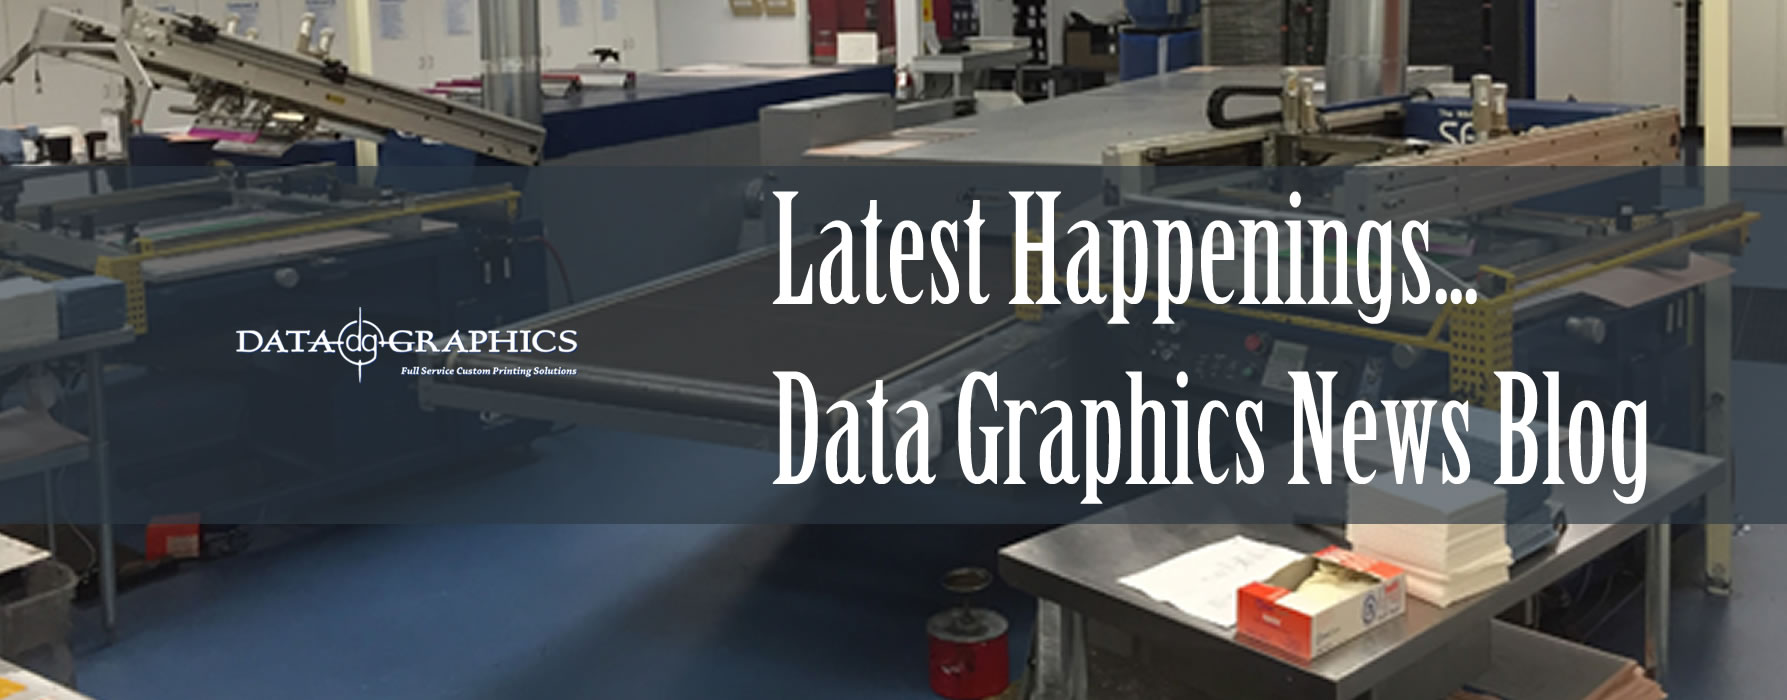 Data Graphics Latest Happenings - Blog